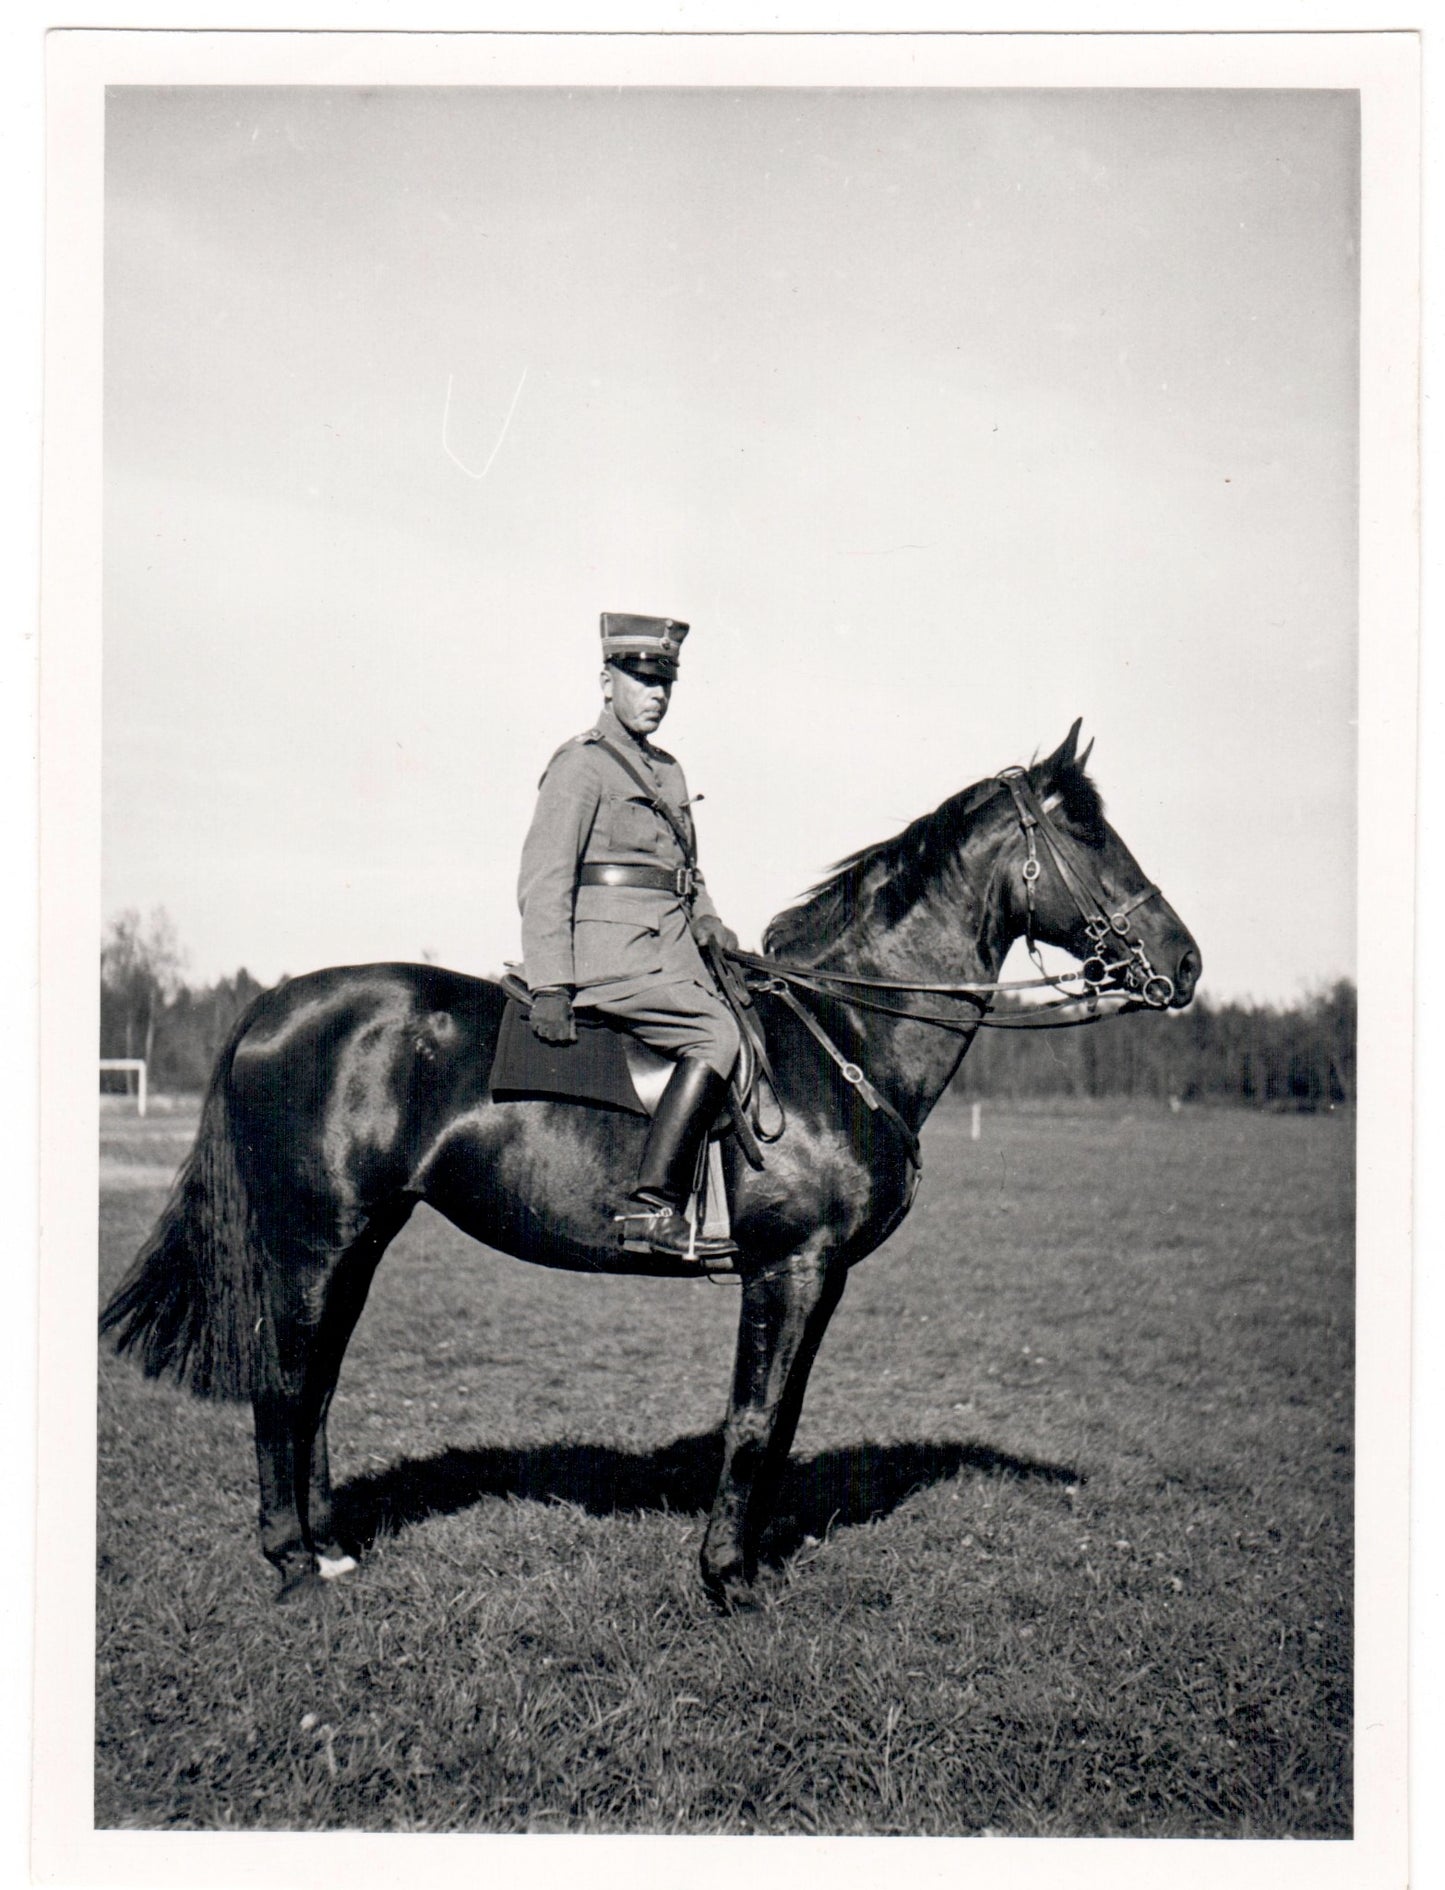 Vintage Photography - Horse Races - Officer - Solider - Man on Horse - Sweden